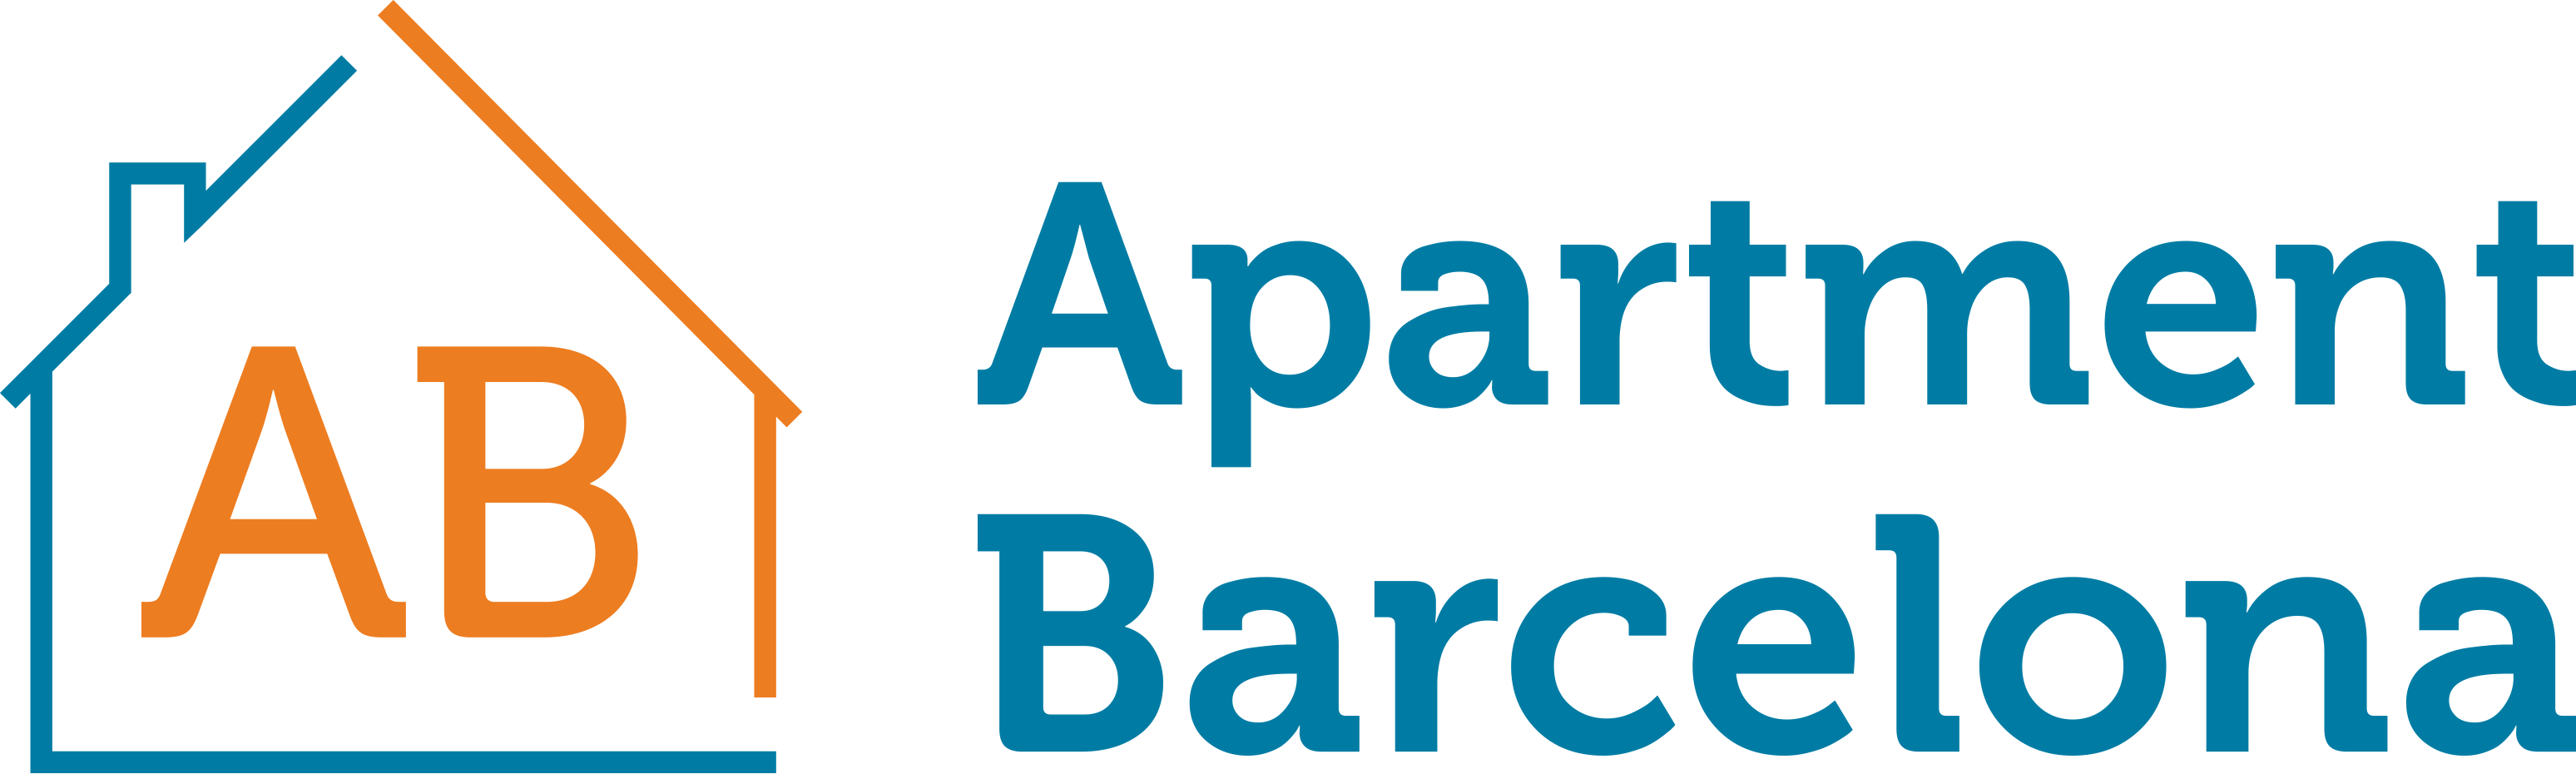 AB APARTMENT BARCELONA logo